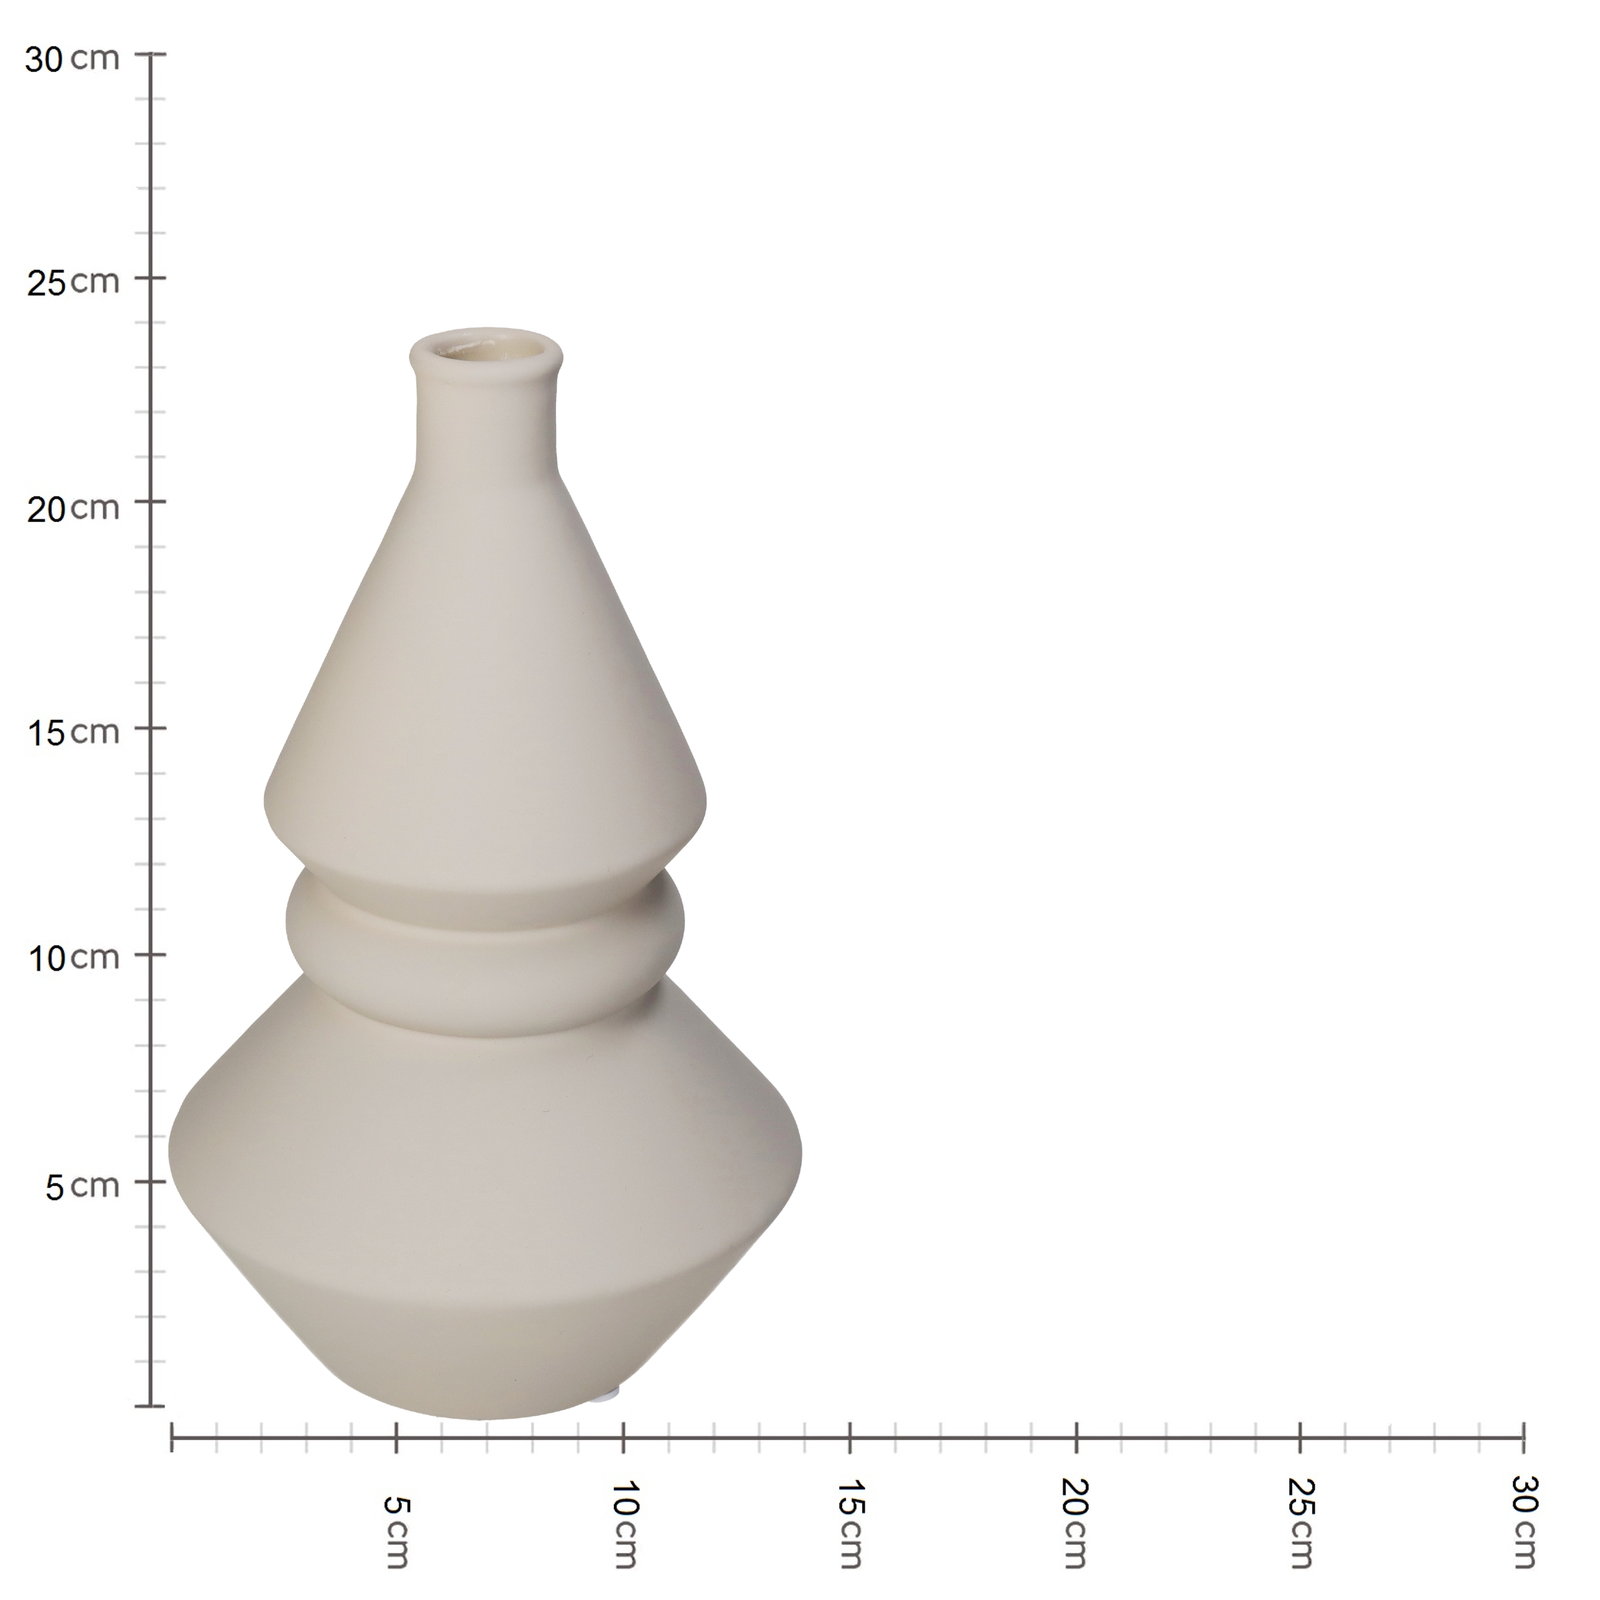 Vase Dolomite Beige 14.3x14.3x23.8